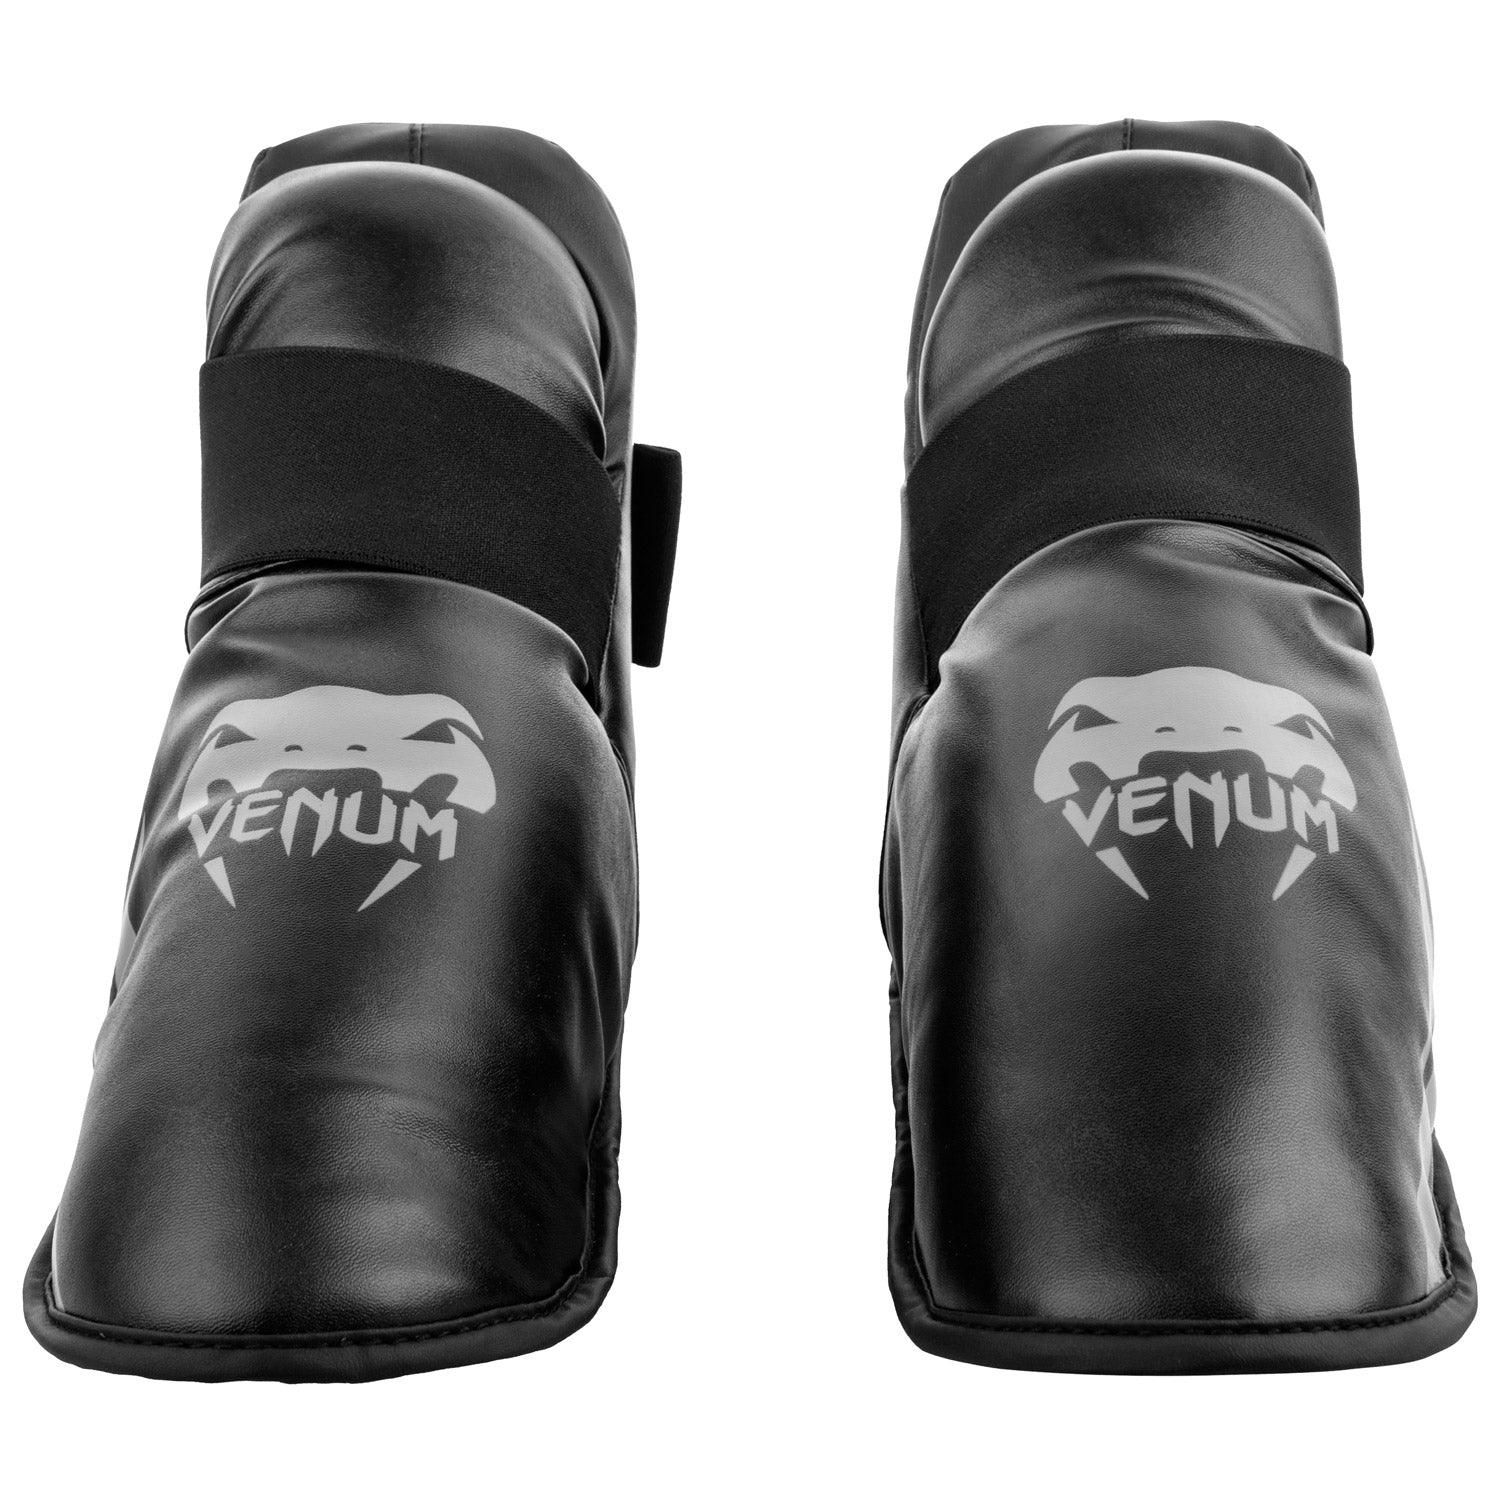 Venum Challenger Foot Gear - Black/Grey Picture 1